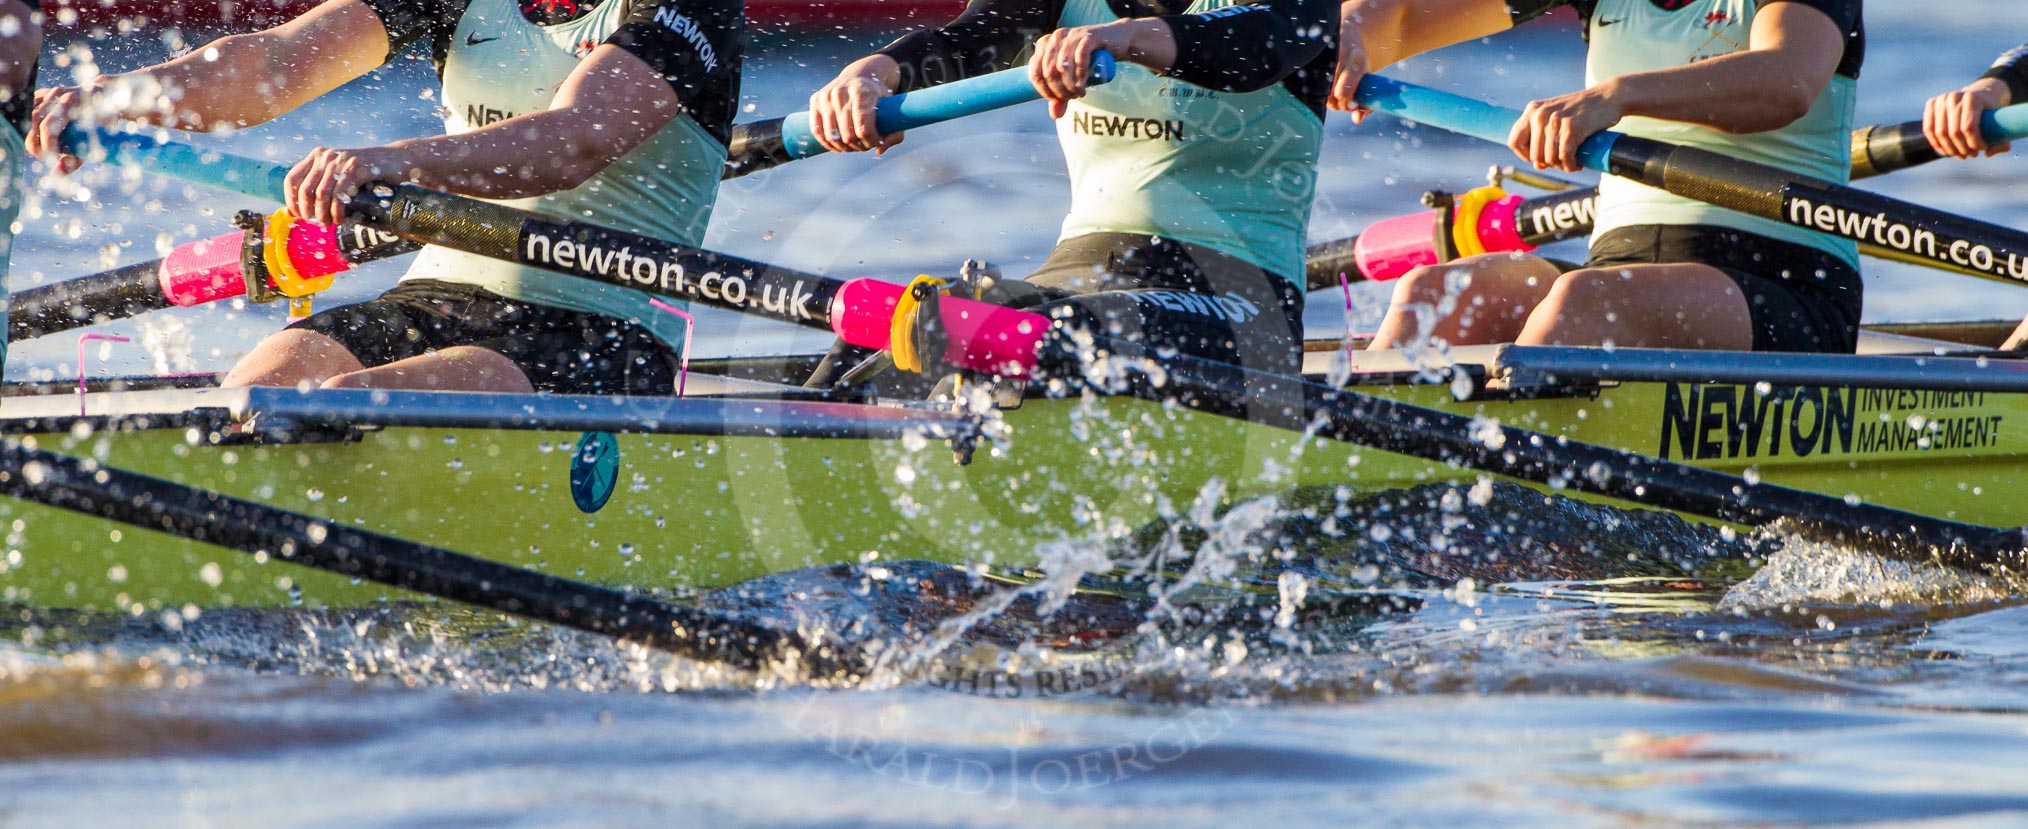 The Boat Race season 2014 - Women's Trial VIIIs(CUWBC, Cambridge): Nudge Nudge..
River Thames between Putney Bridge and Mortlake,
London SW15,

United Kingdom,
on 19 December 2013 at 14:03, image #314